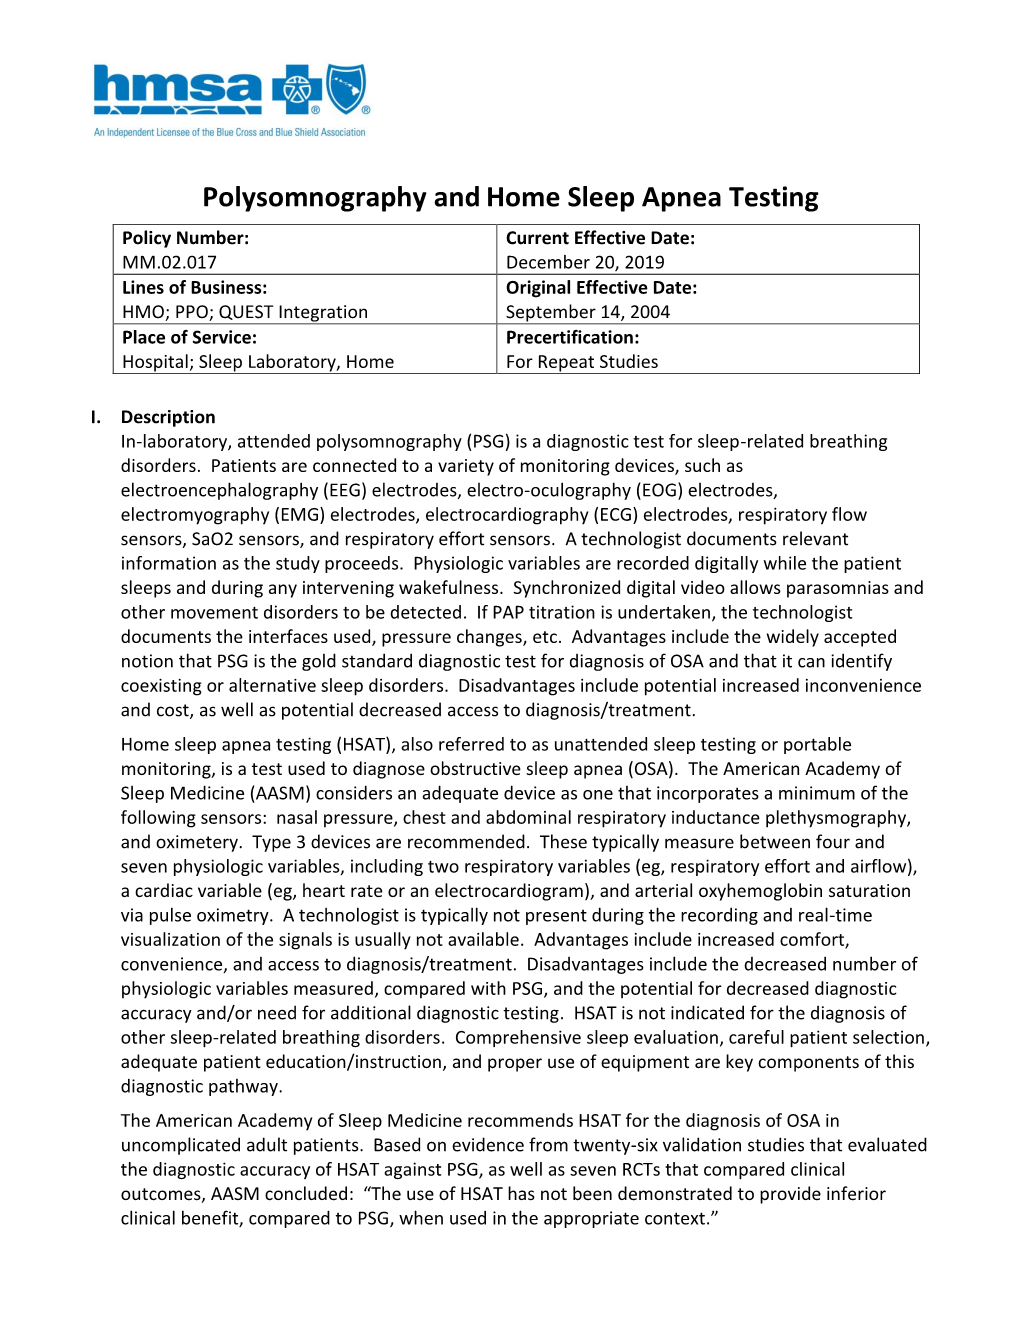 Polysomnography and Home Sleep Apnea Testing 12/20/19